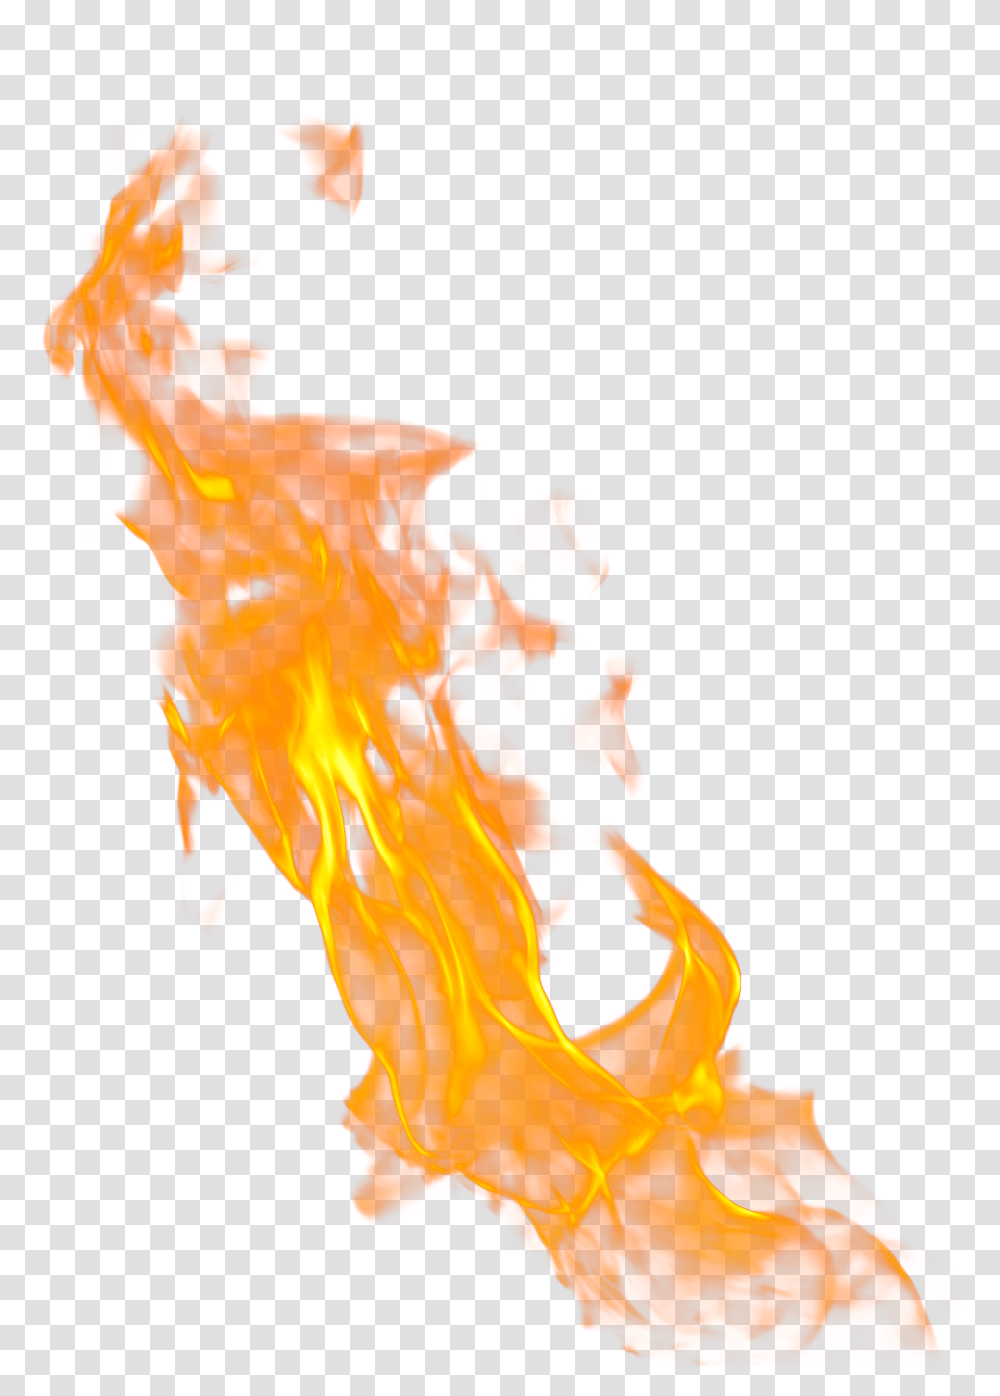 Fire Flame Ignite Image Background Fire Flame, Bonfire, Diwali Transparent Png